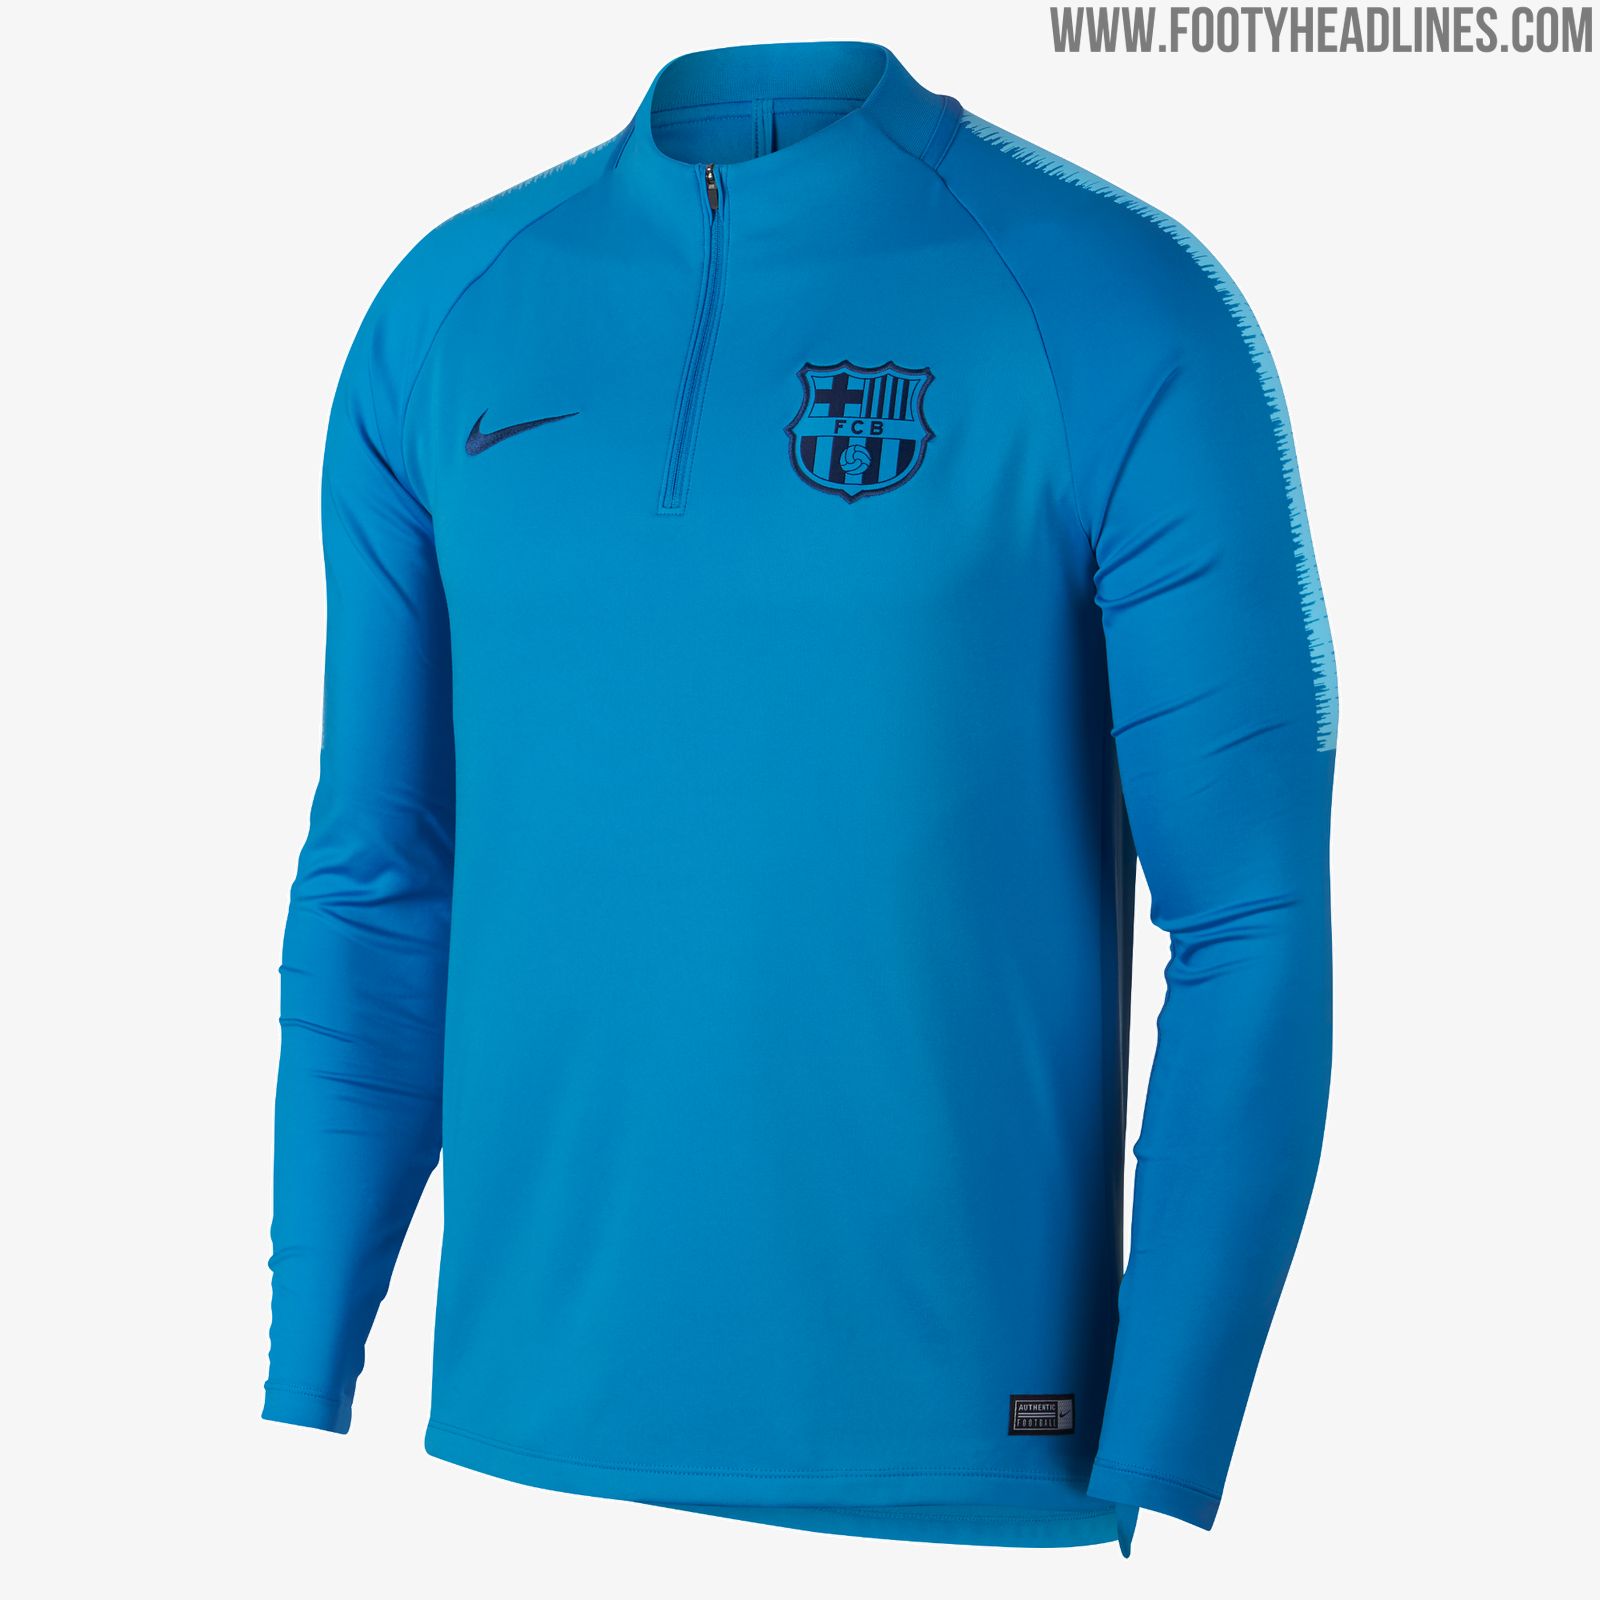 Nike Barcelona 2019 Training Kit Released - Footy Headlines